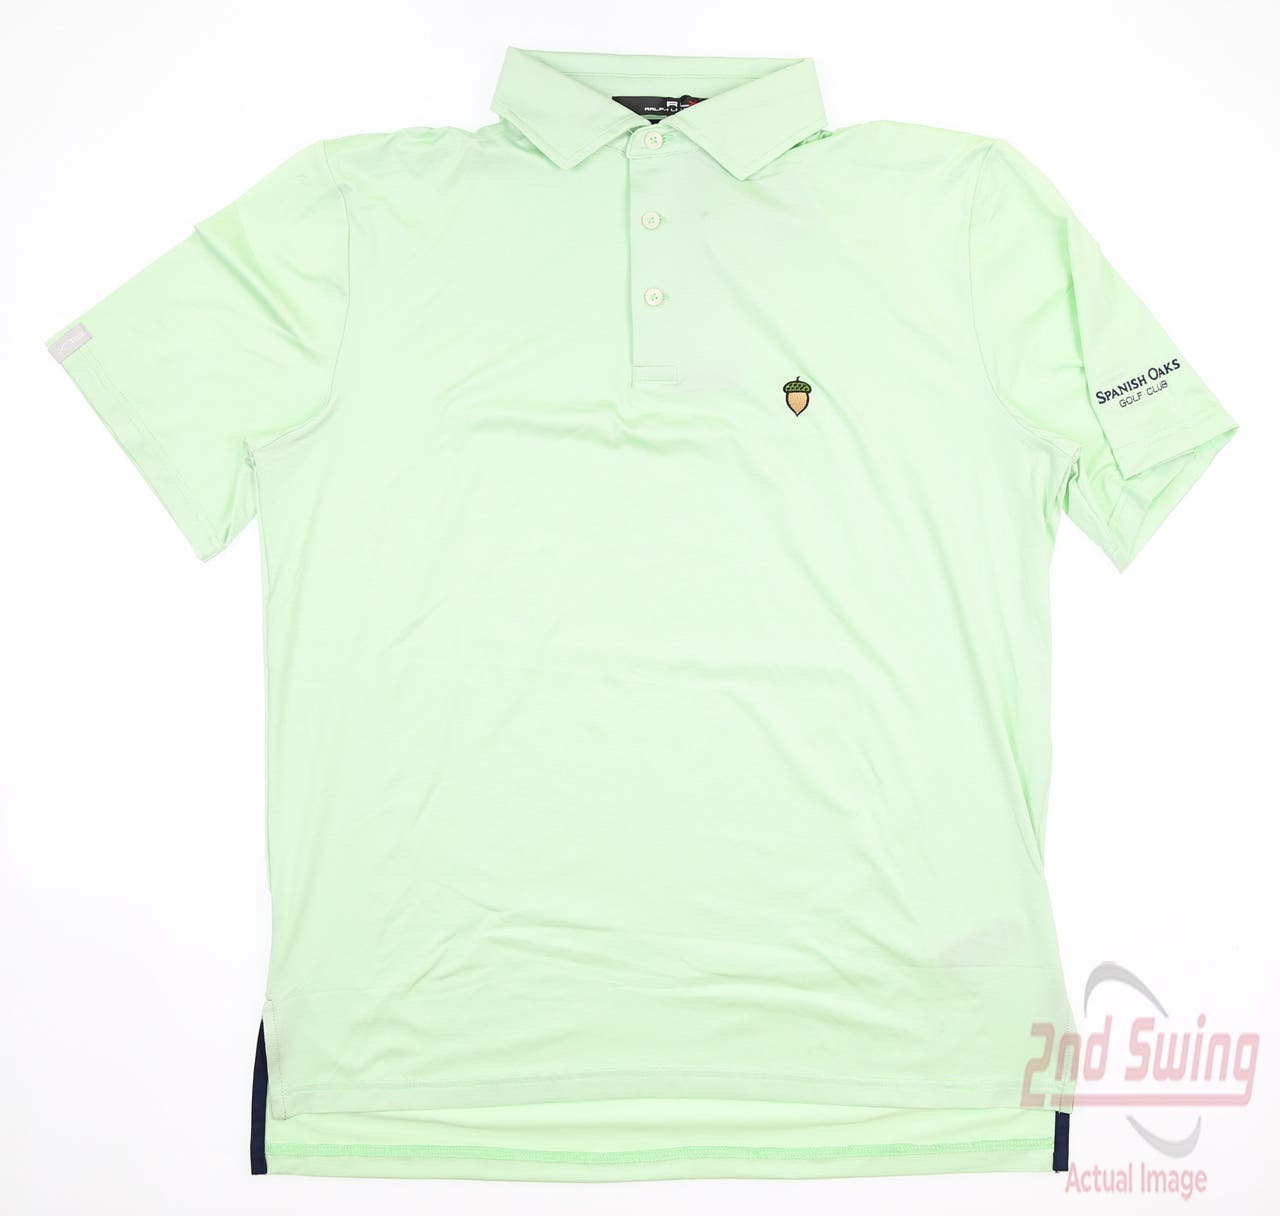 New W/ Logo Mens Ralph Lauren RLX Golf Polo Medium M Green MSRP $99 785805821005